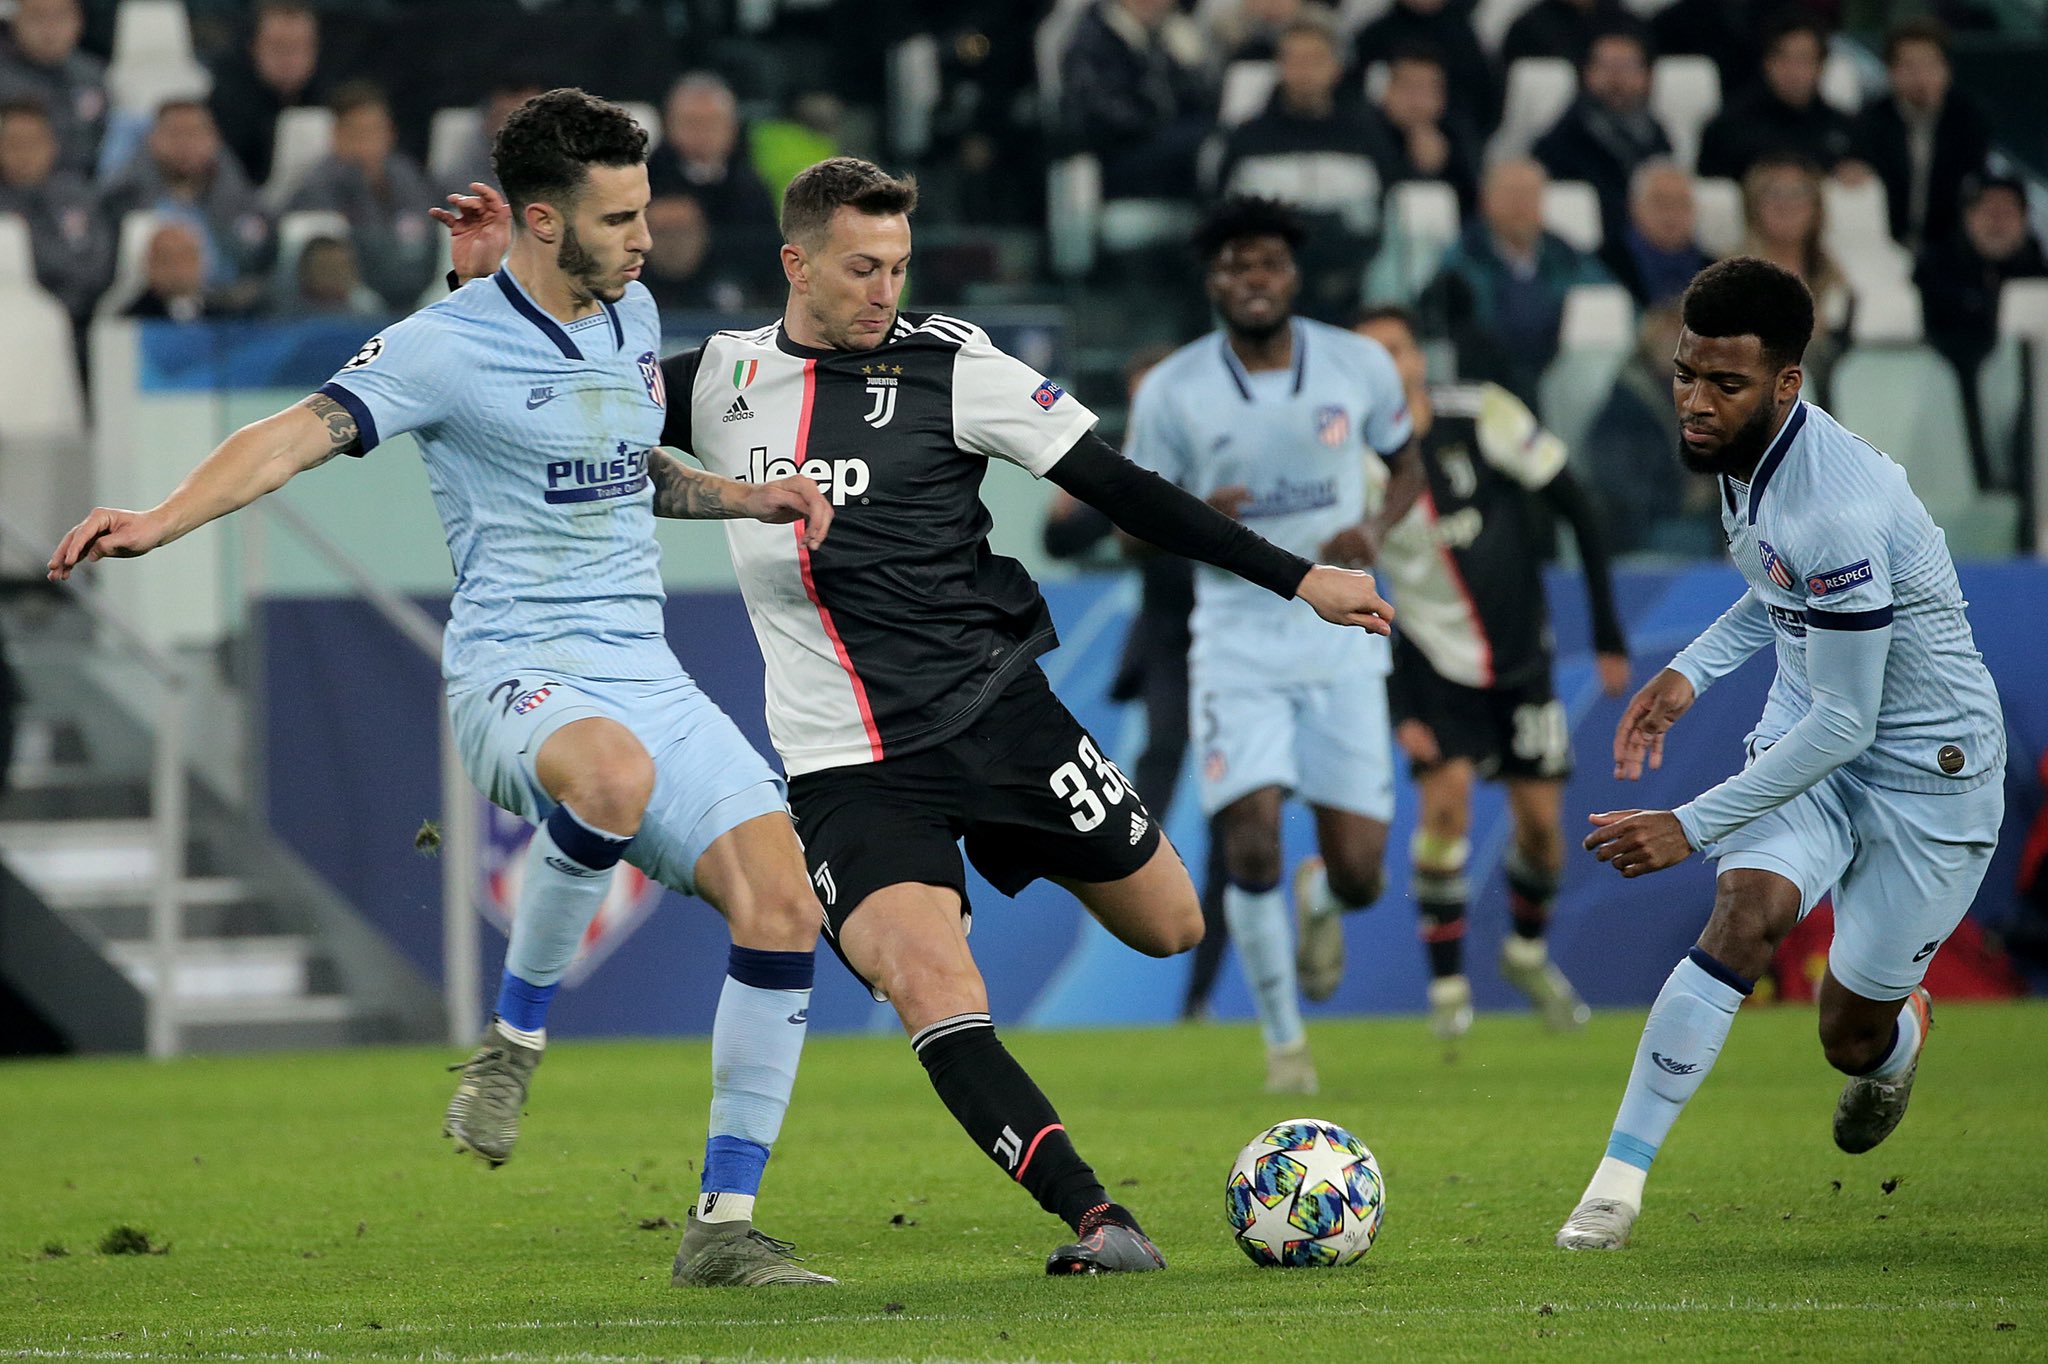 Coppa Italia to re-start on Friday with Juventus-AC Milan semi-final second leg